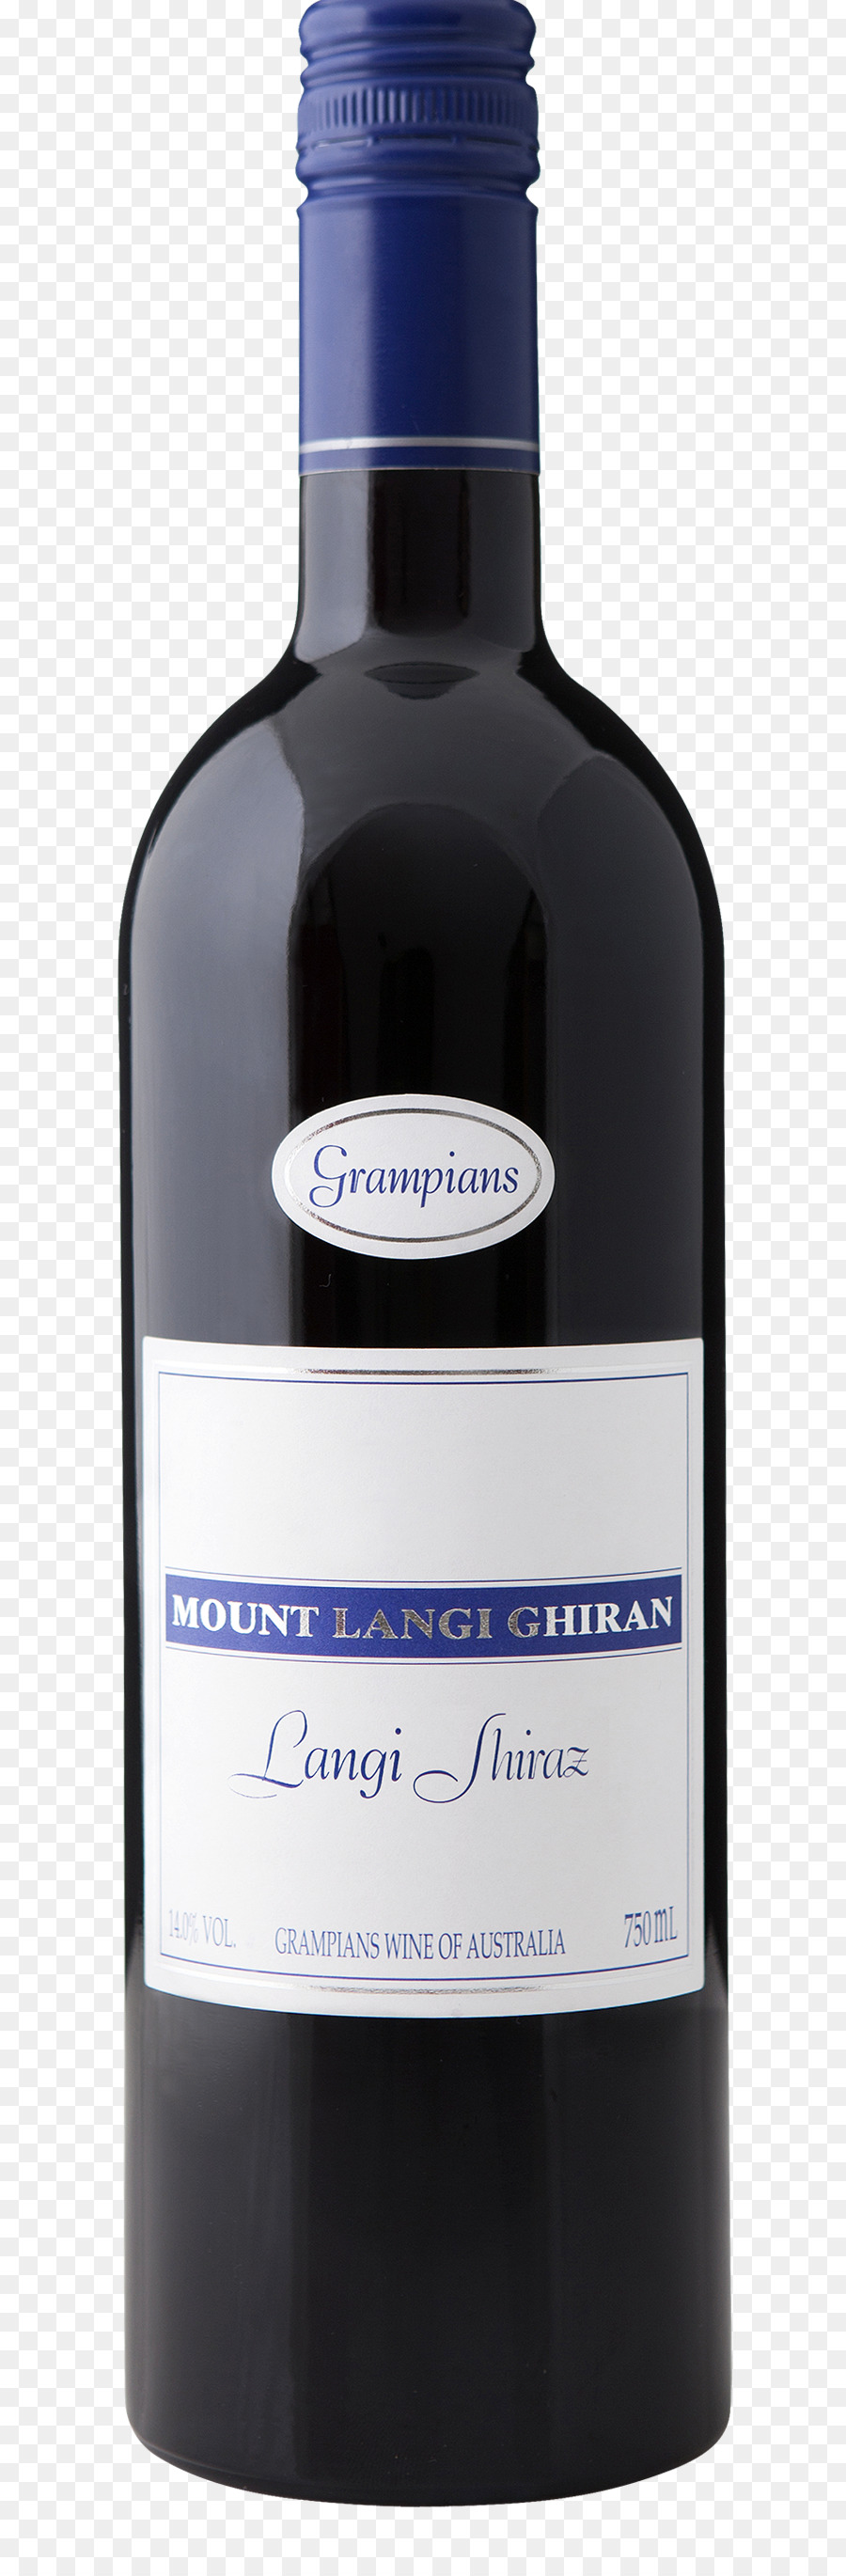 Cavità Shiraz Mount Langi Ghiran Vino Rosso Liquoroso - cliffhanger pinot grigio